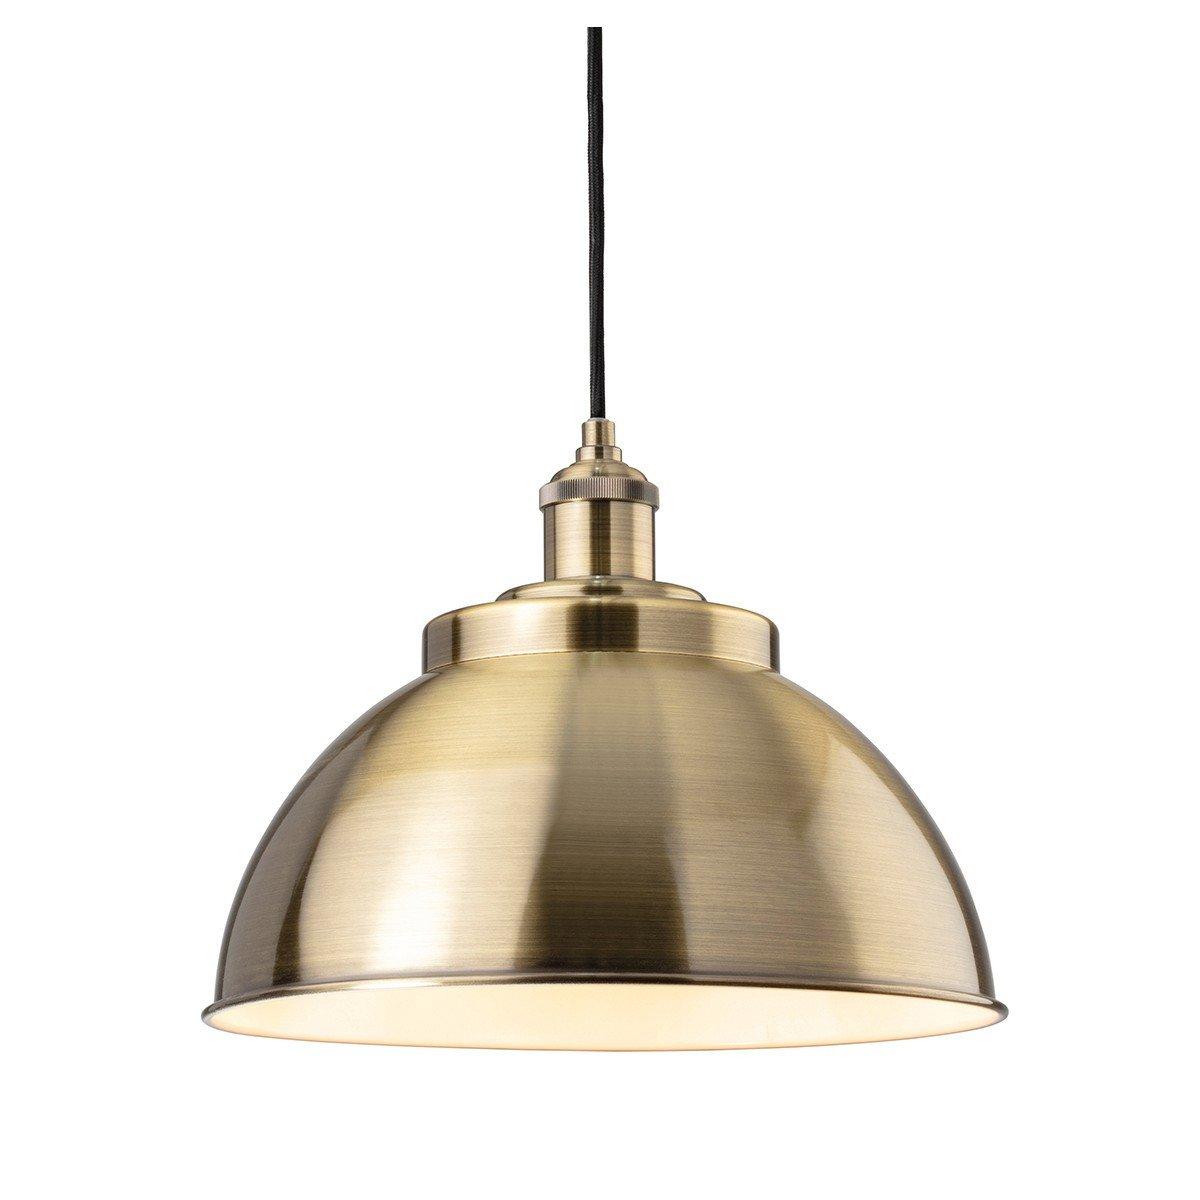 Genoa Industrial Dome Pendant Light Antique Brass